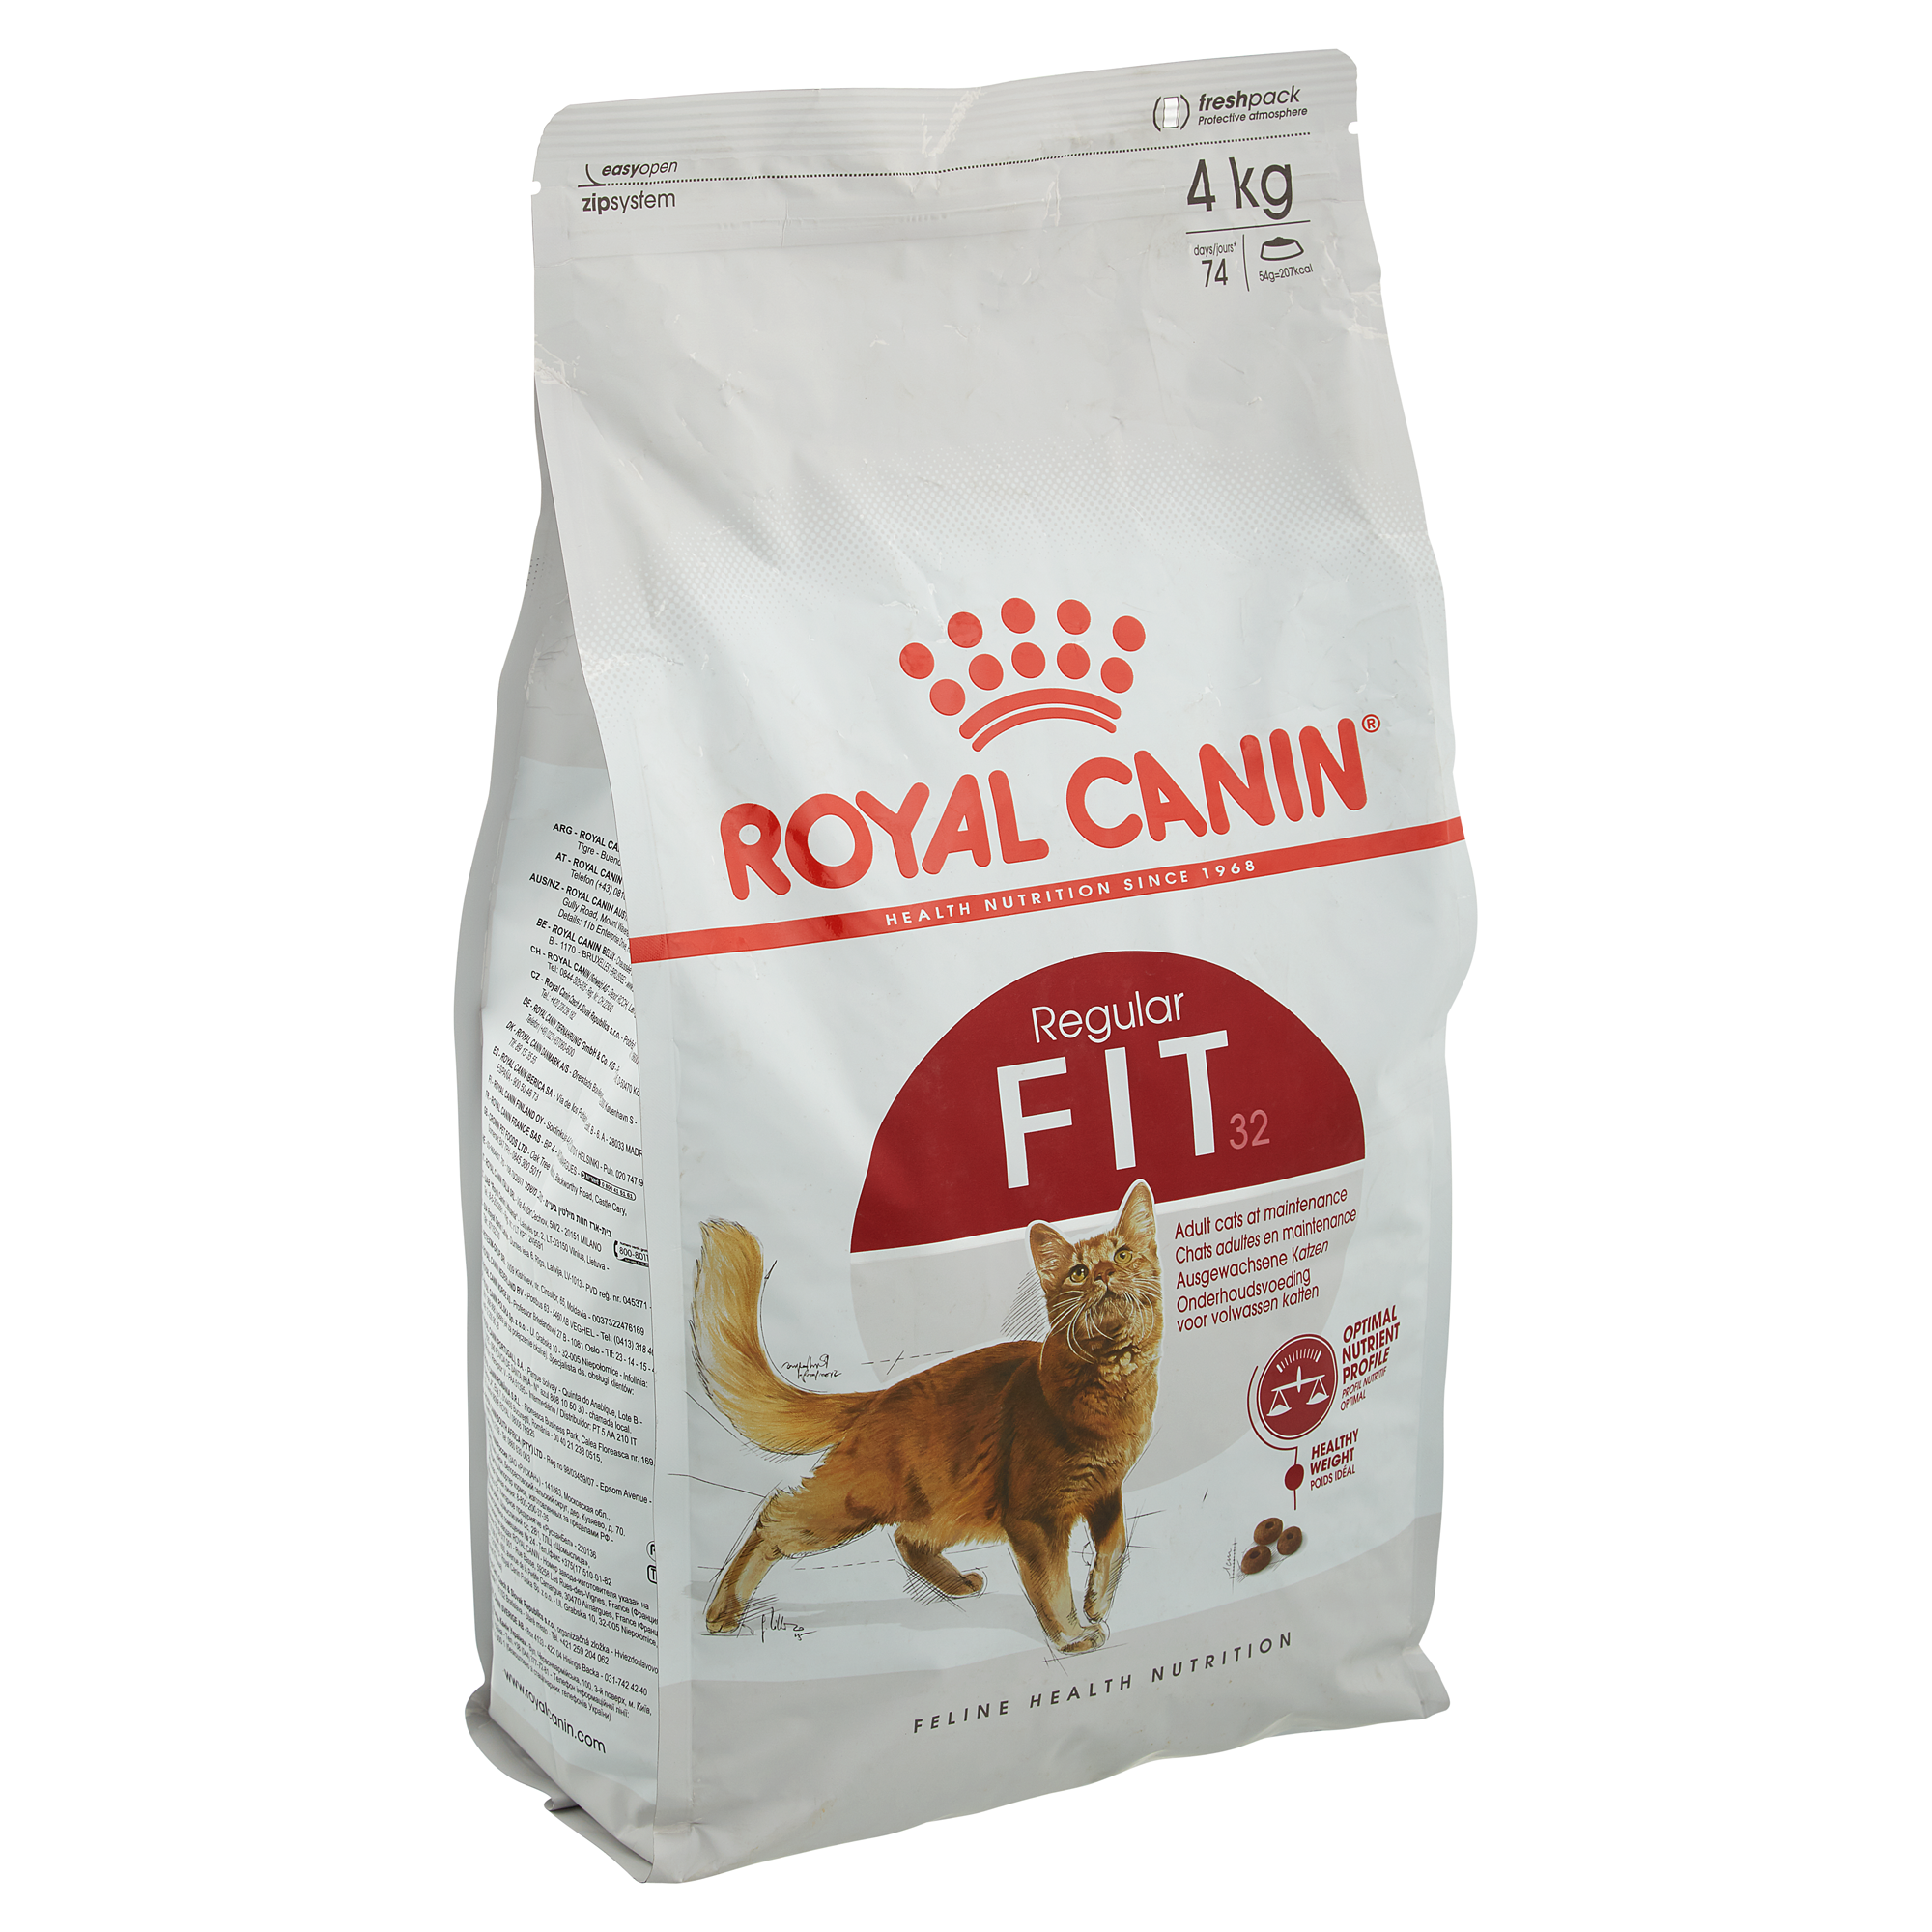 Katzentrockenfutter "Feline Health Nutrition" Regular Fit 32 4 kg + product picture